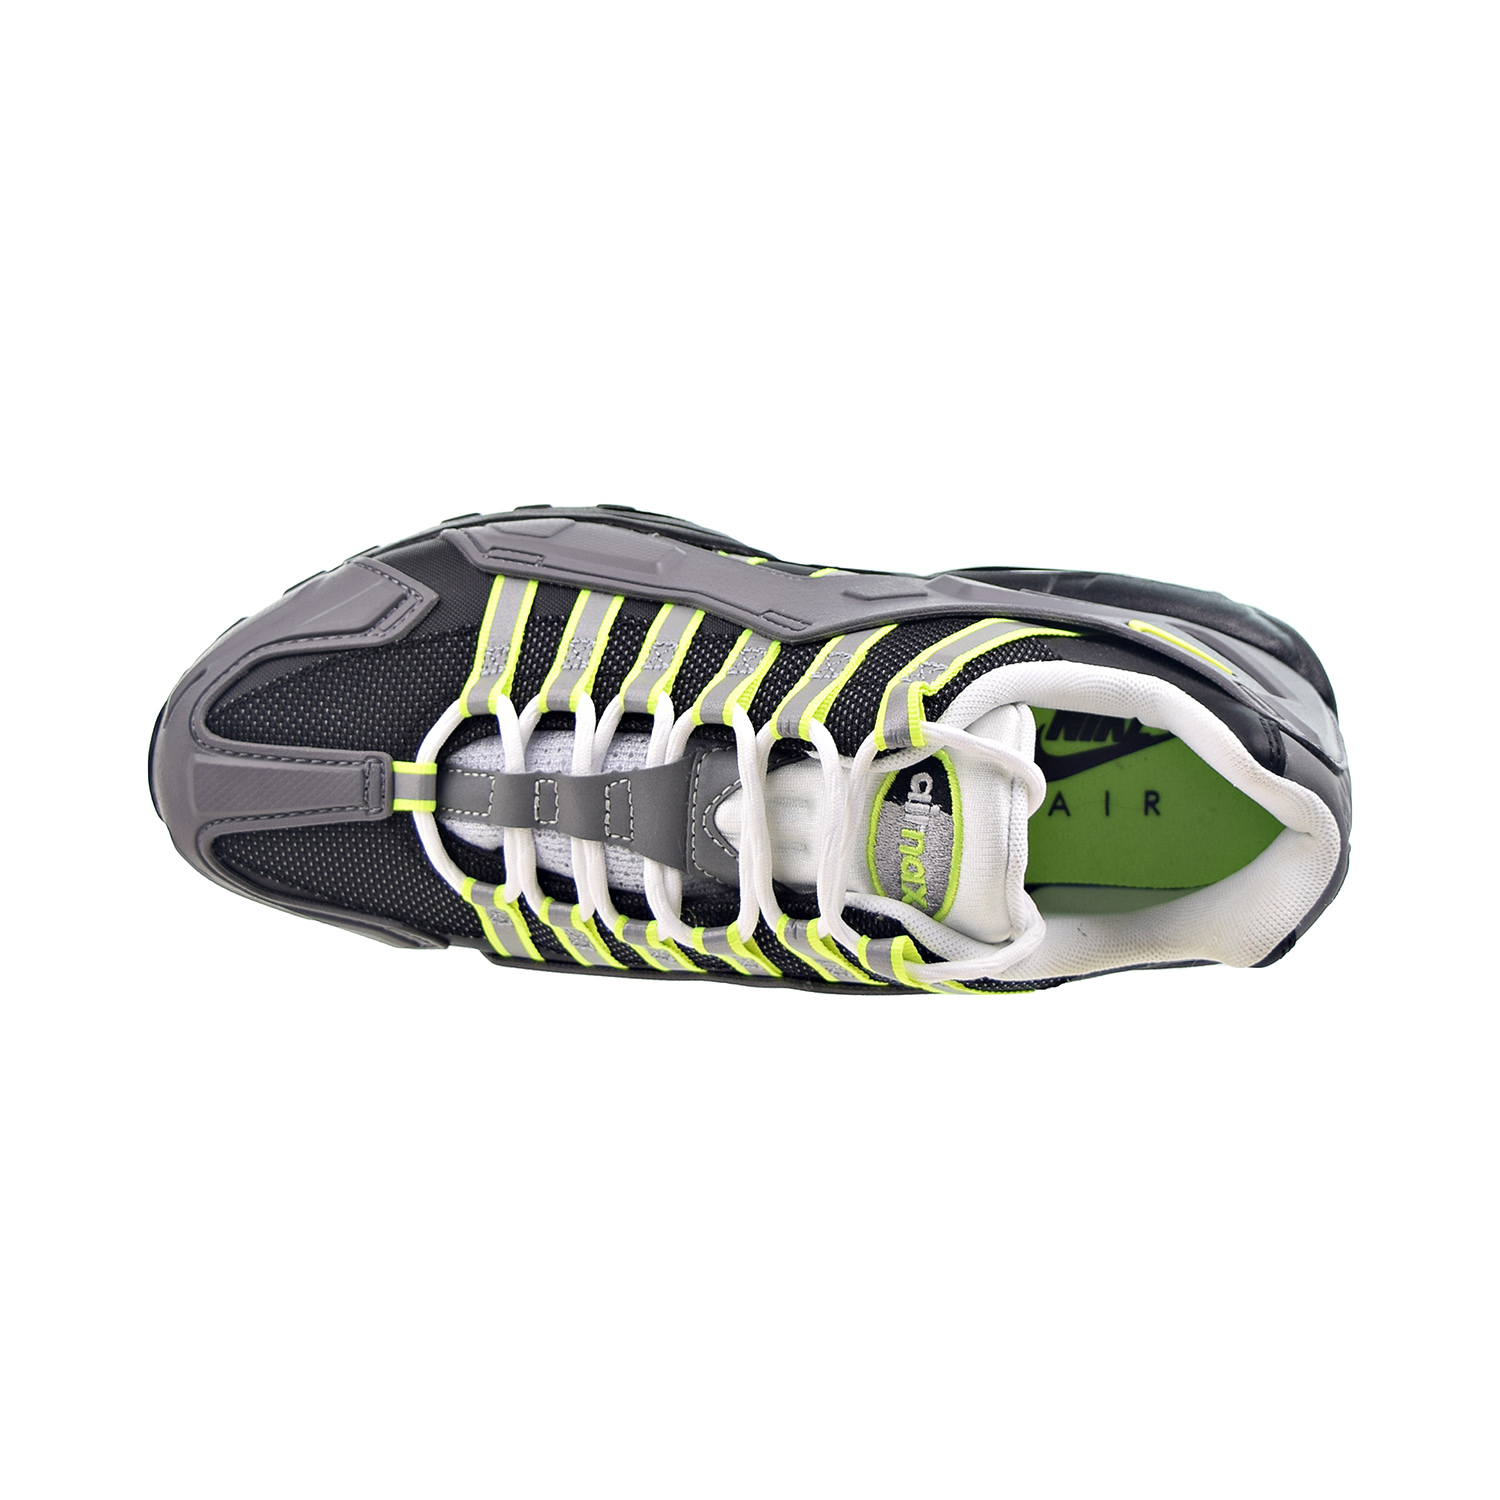 Nike Air Max 95 NDSTRKT AM 95 Men's Shoes Black-Neon Yellow-Medium Grey cz3591-002 - image 5 of 6